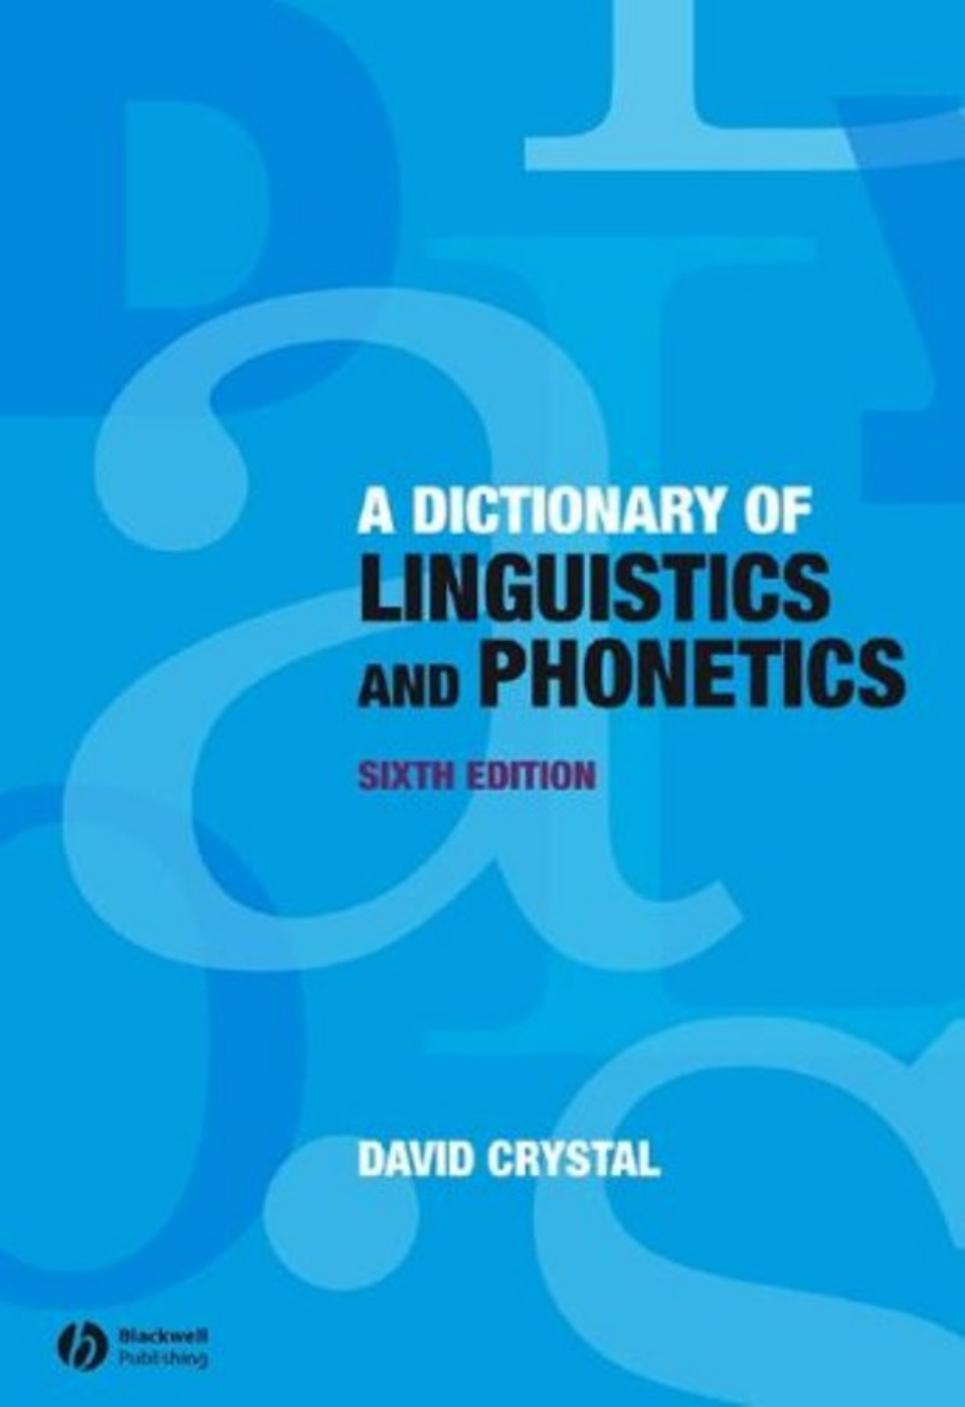 A Dictionary of Linguistics & Phonetics, David Crystal, 6th edition 2009